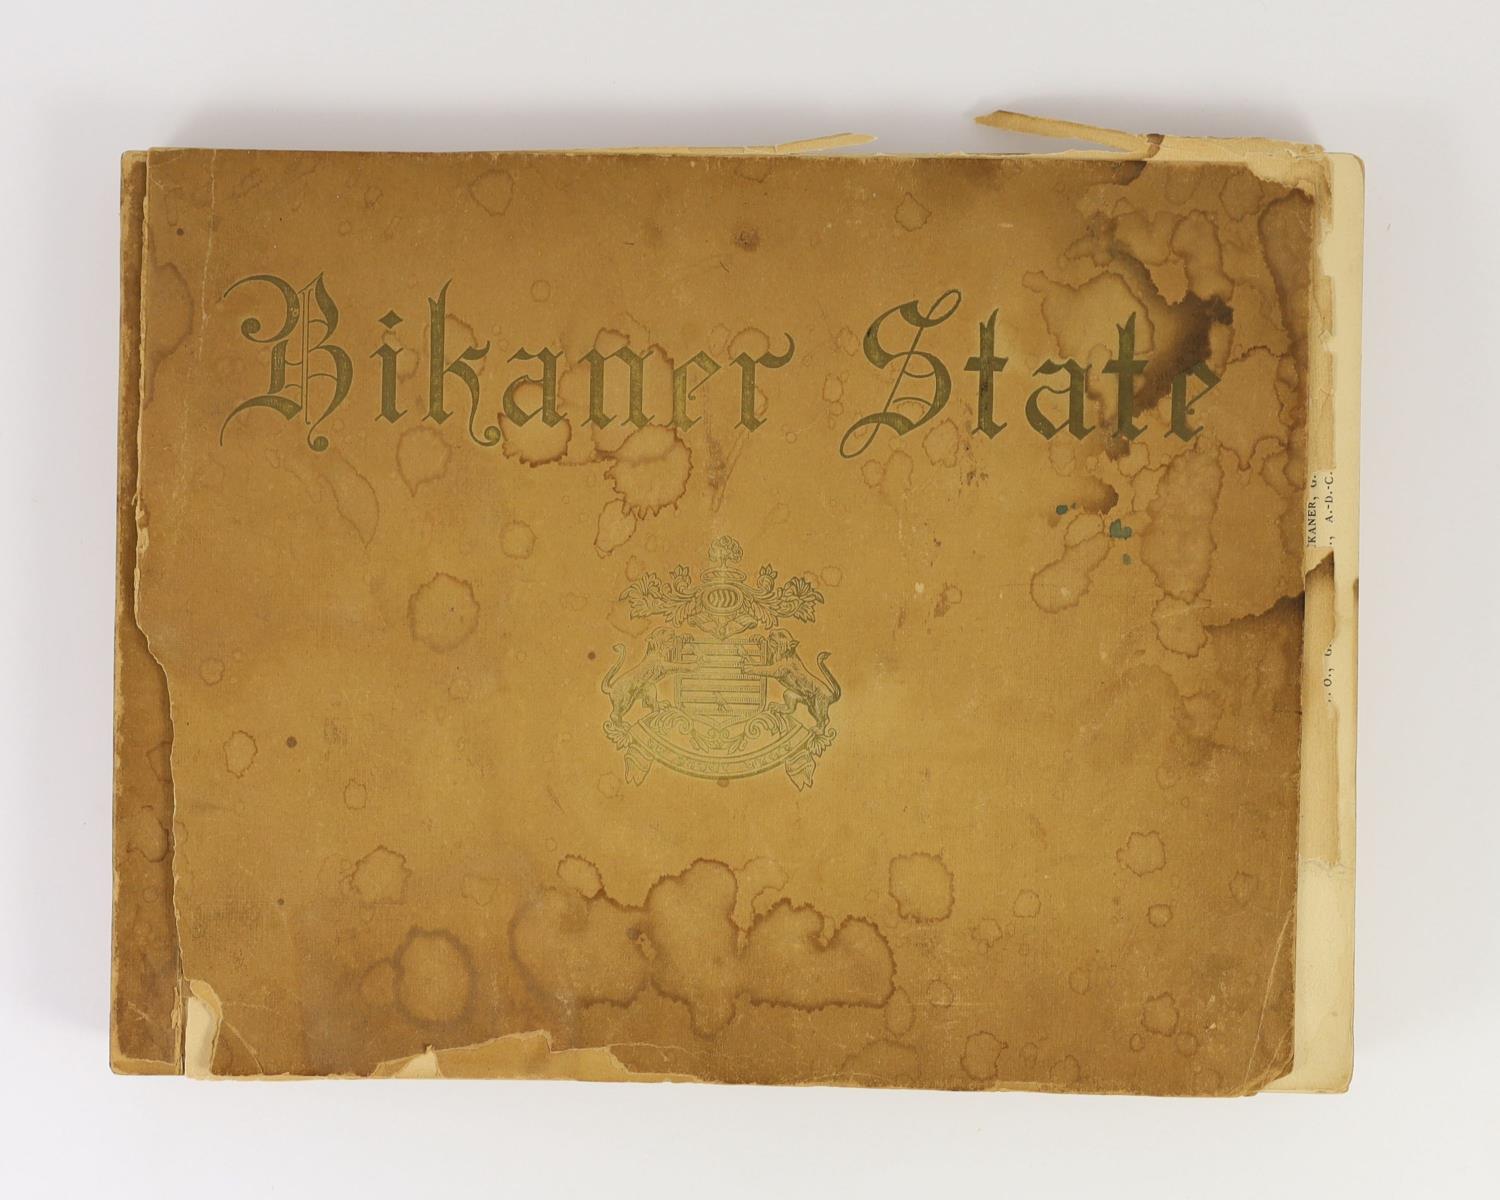 ° ° Bikaner State. Oblong folio, Editions de Luxe, Paris, n.d. [c.1930]. 50 leaves of sepia